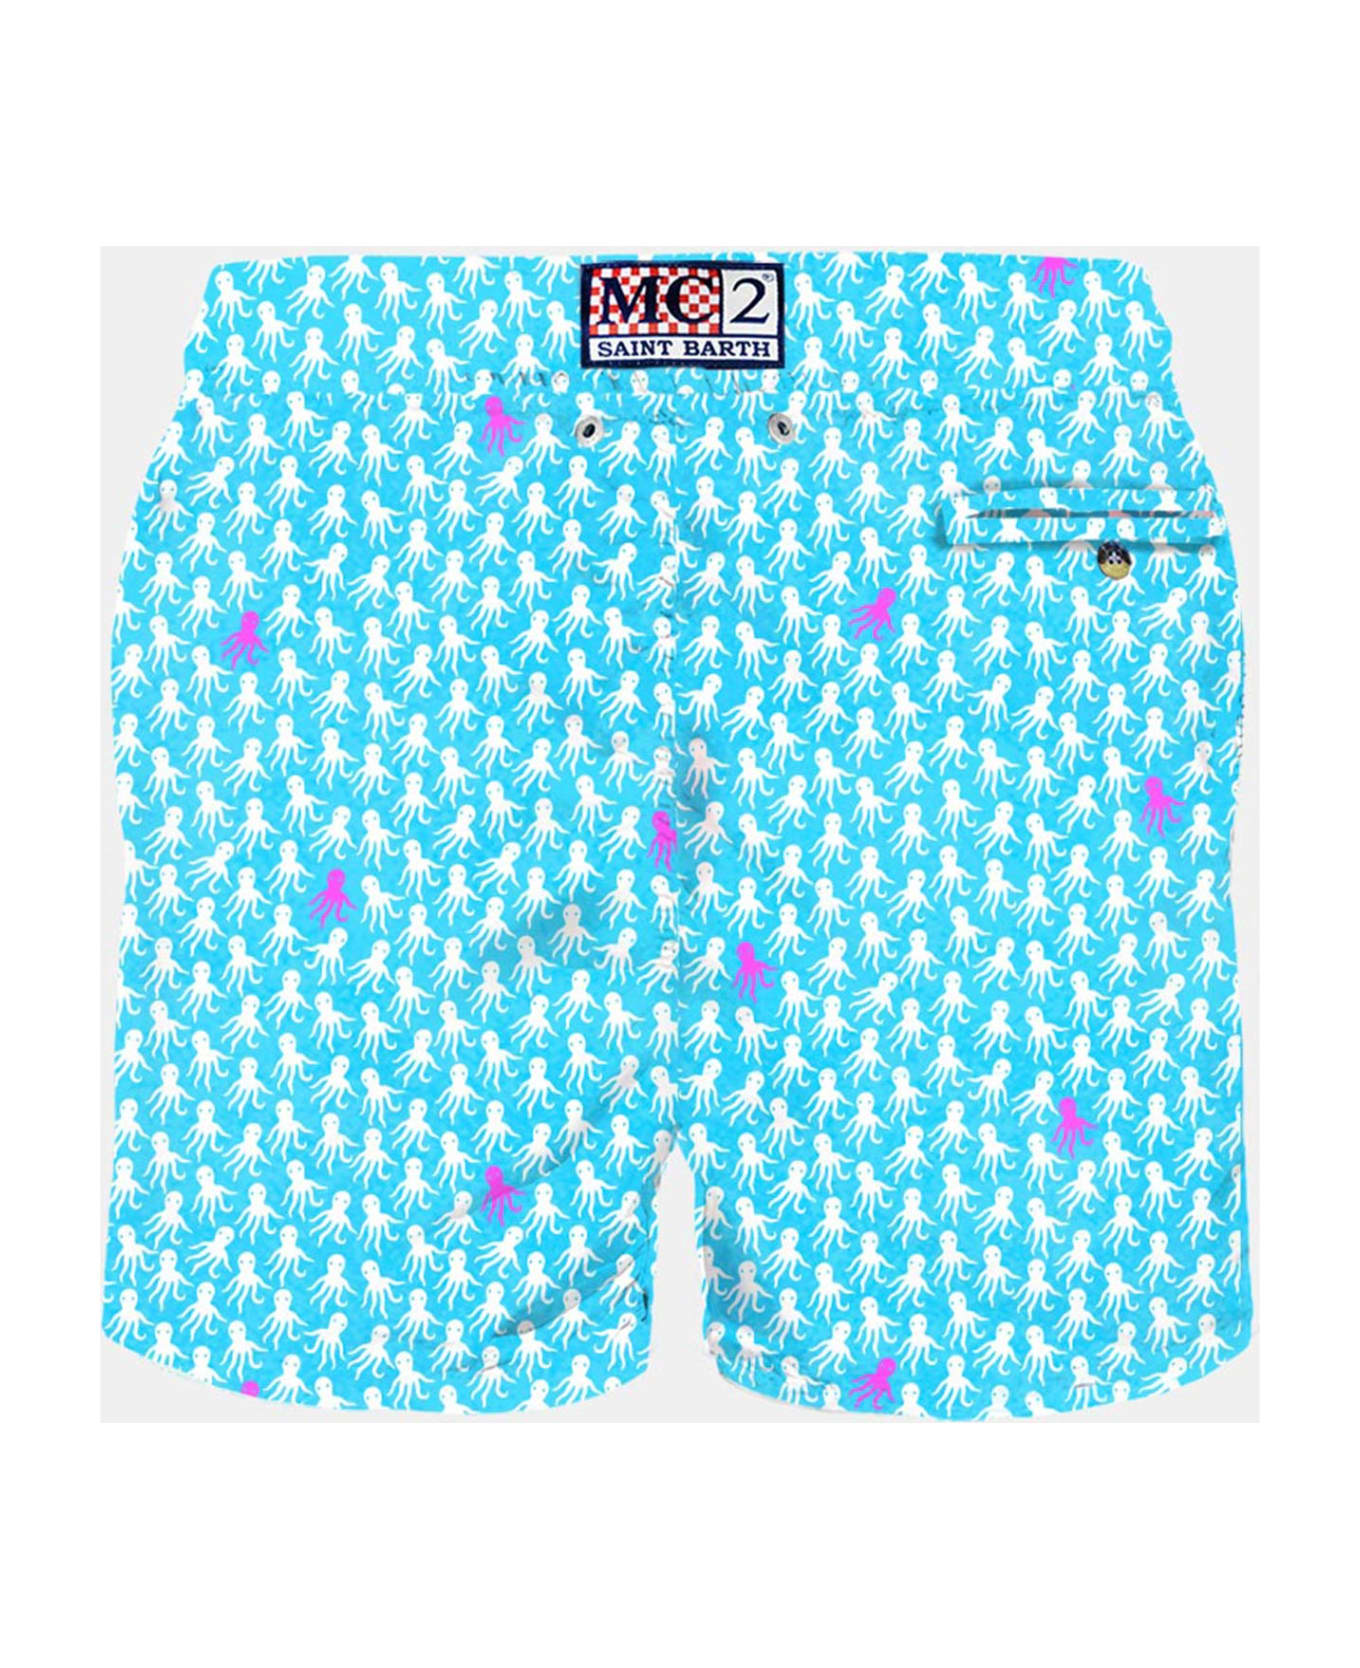 MC2 Saint Barth Man Light Fabric Swim Shorts With White And Fuchsia Octopus Print - SKY